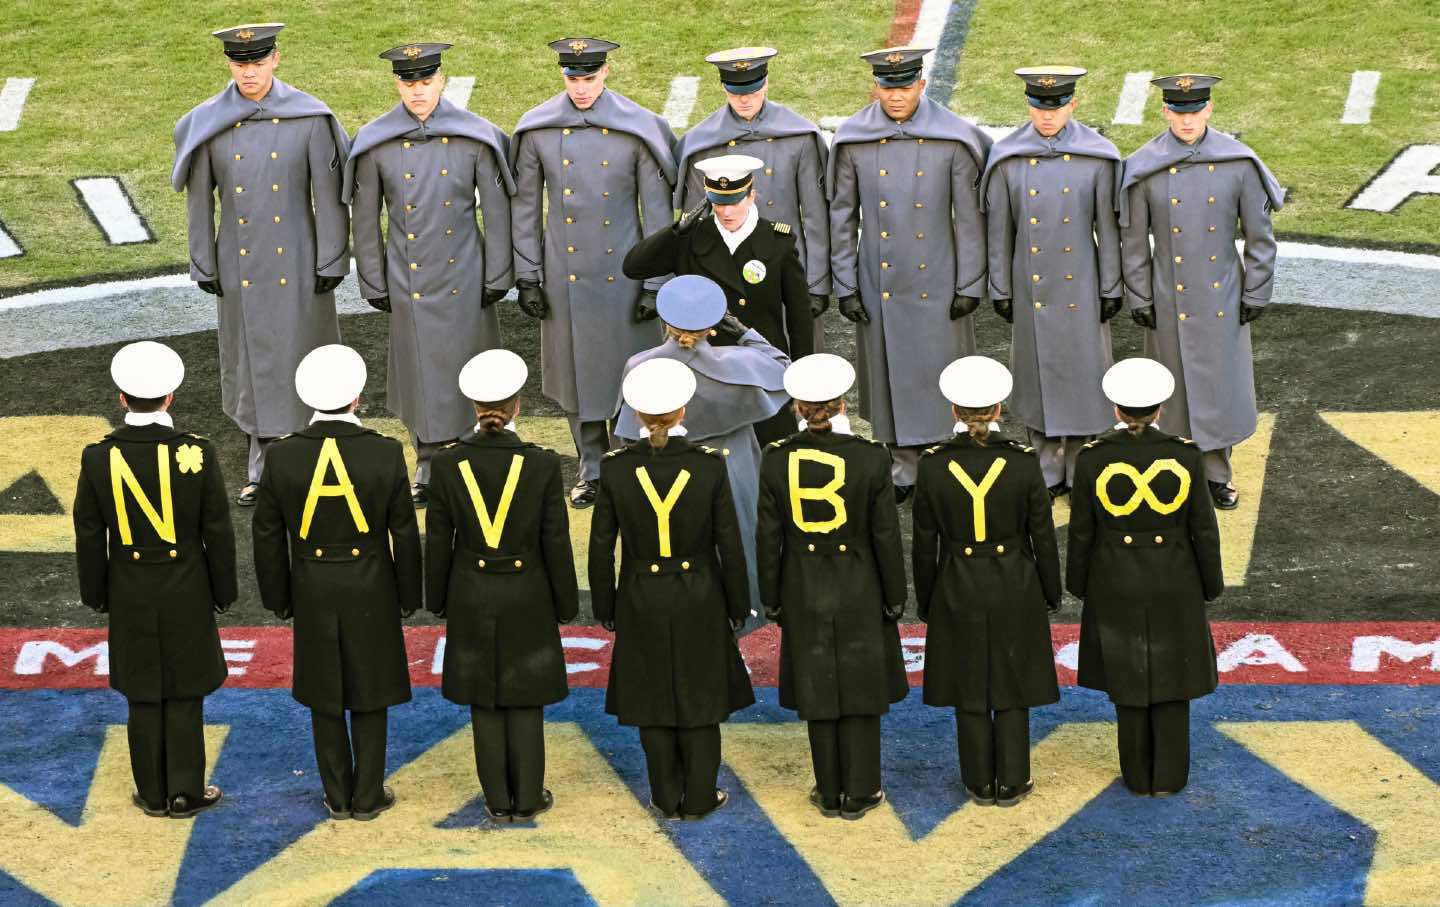 navy midshipmen stand on field prior to army navy game in Philadelphia